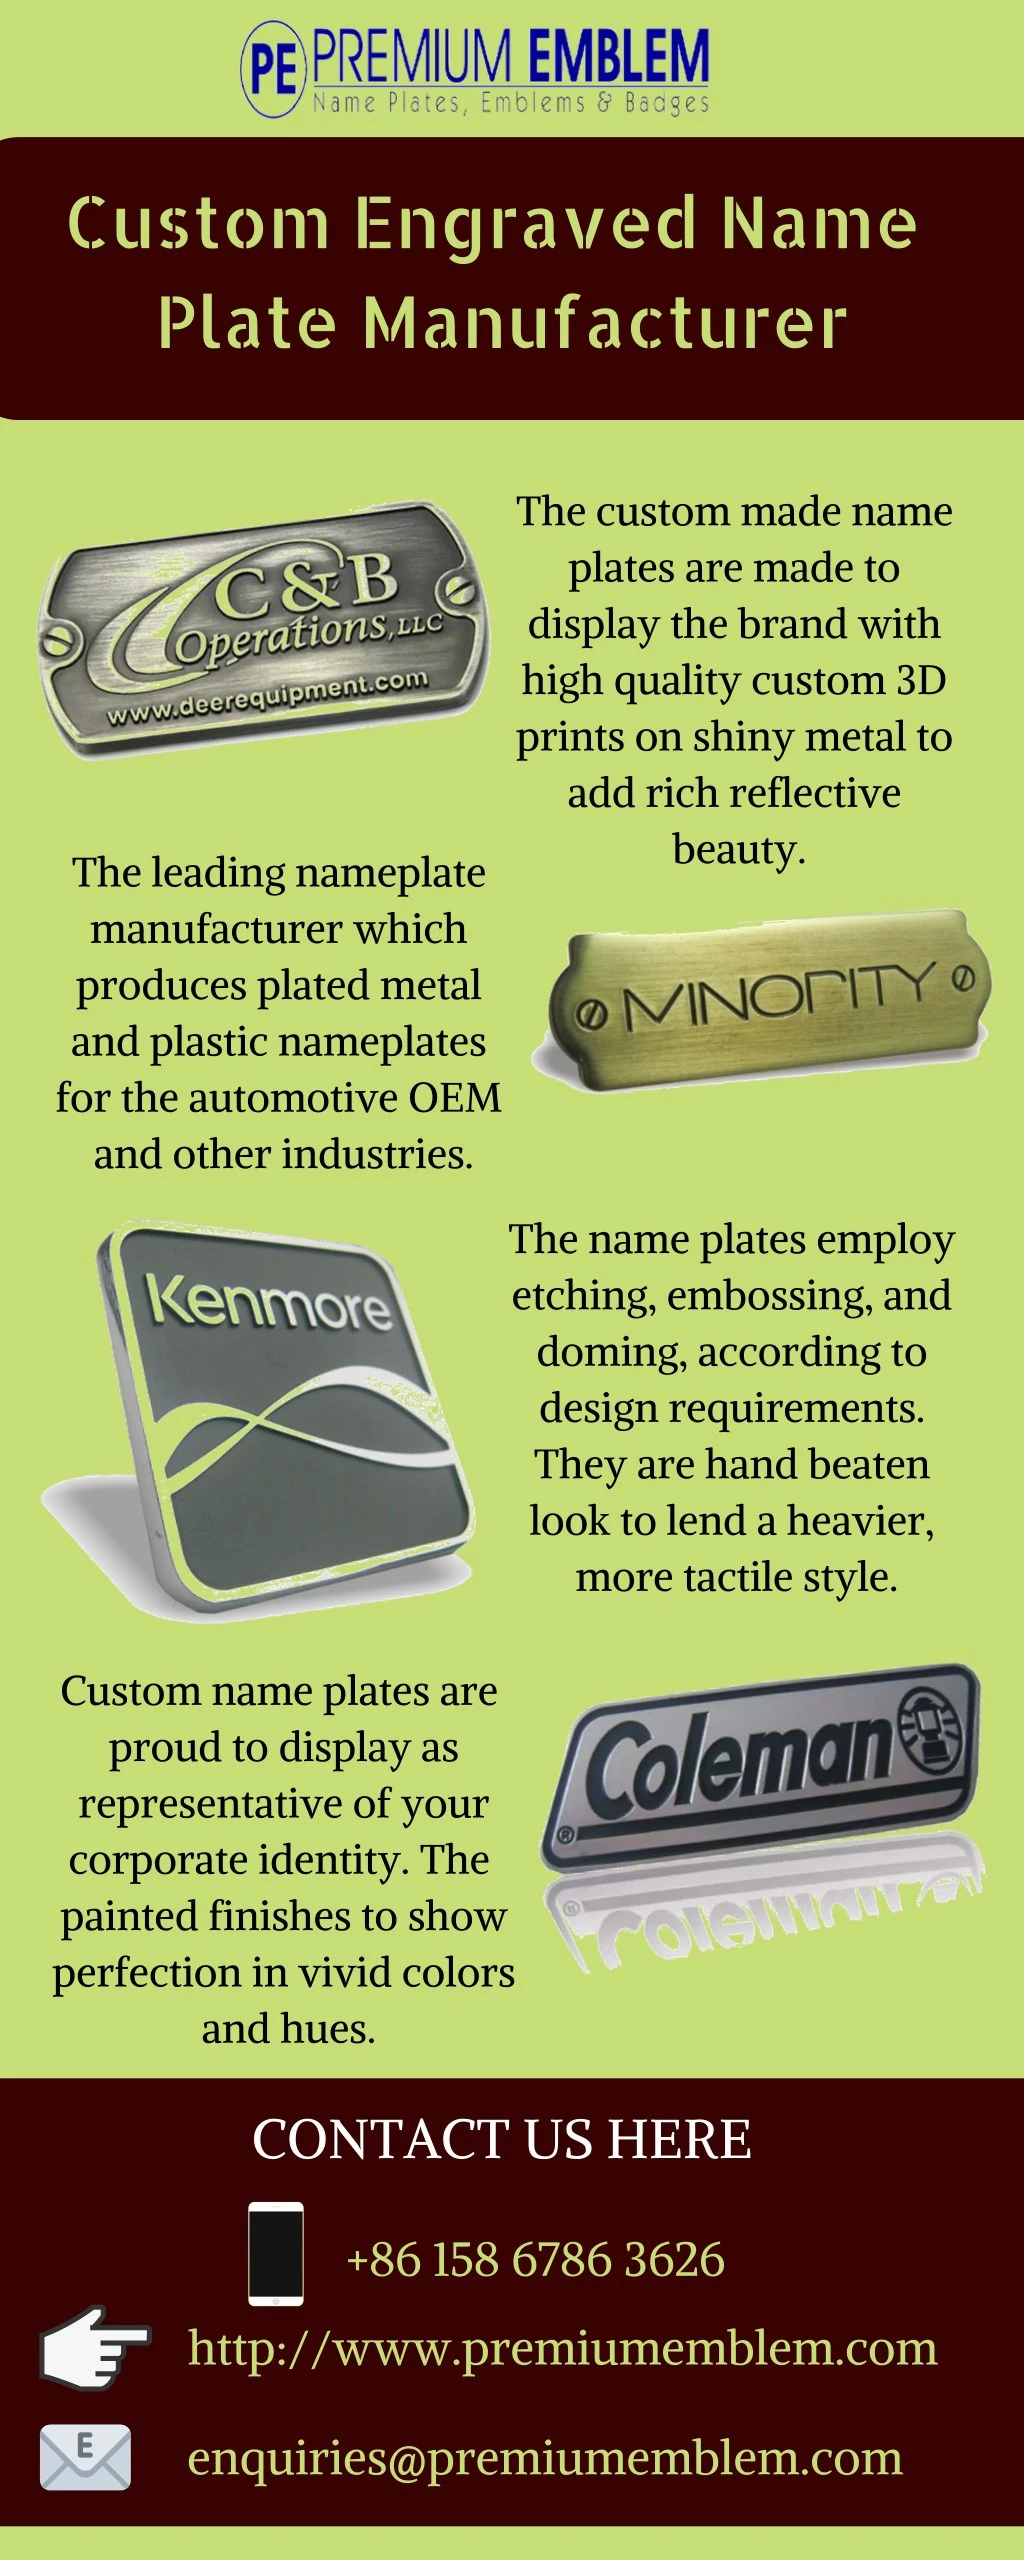 custom engraved name plate manufacturer